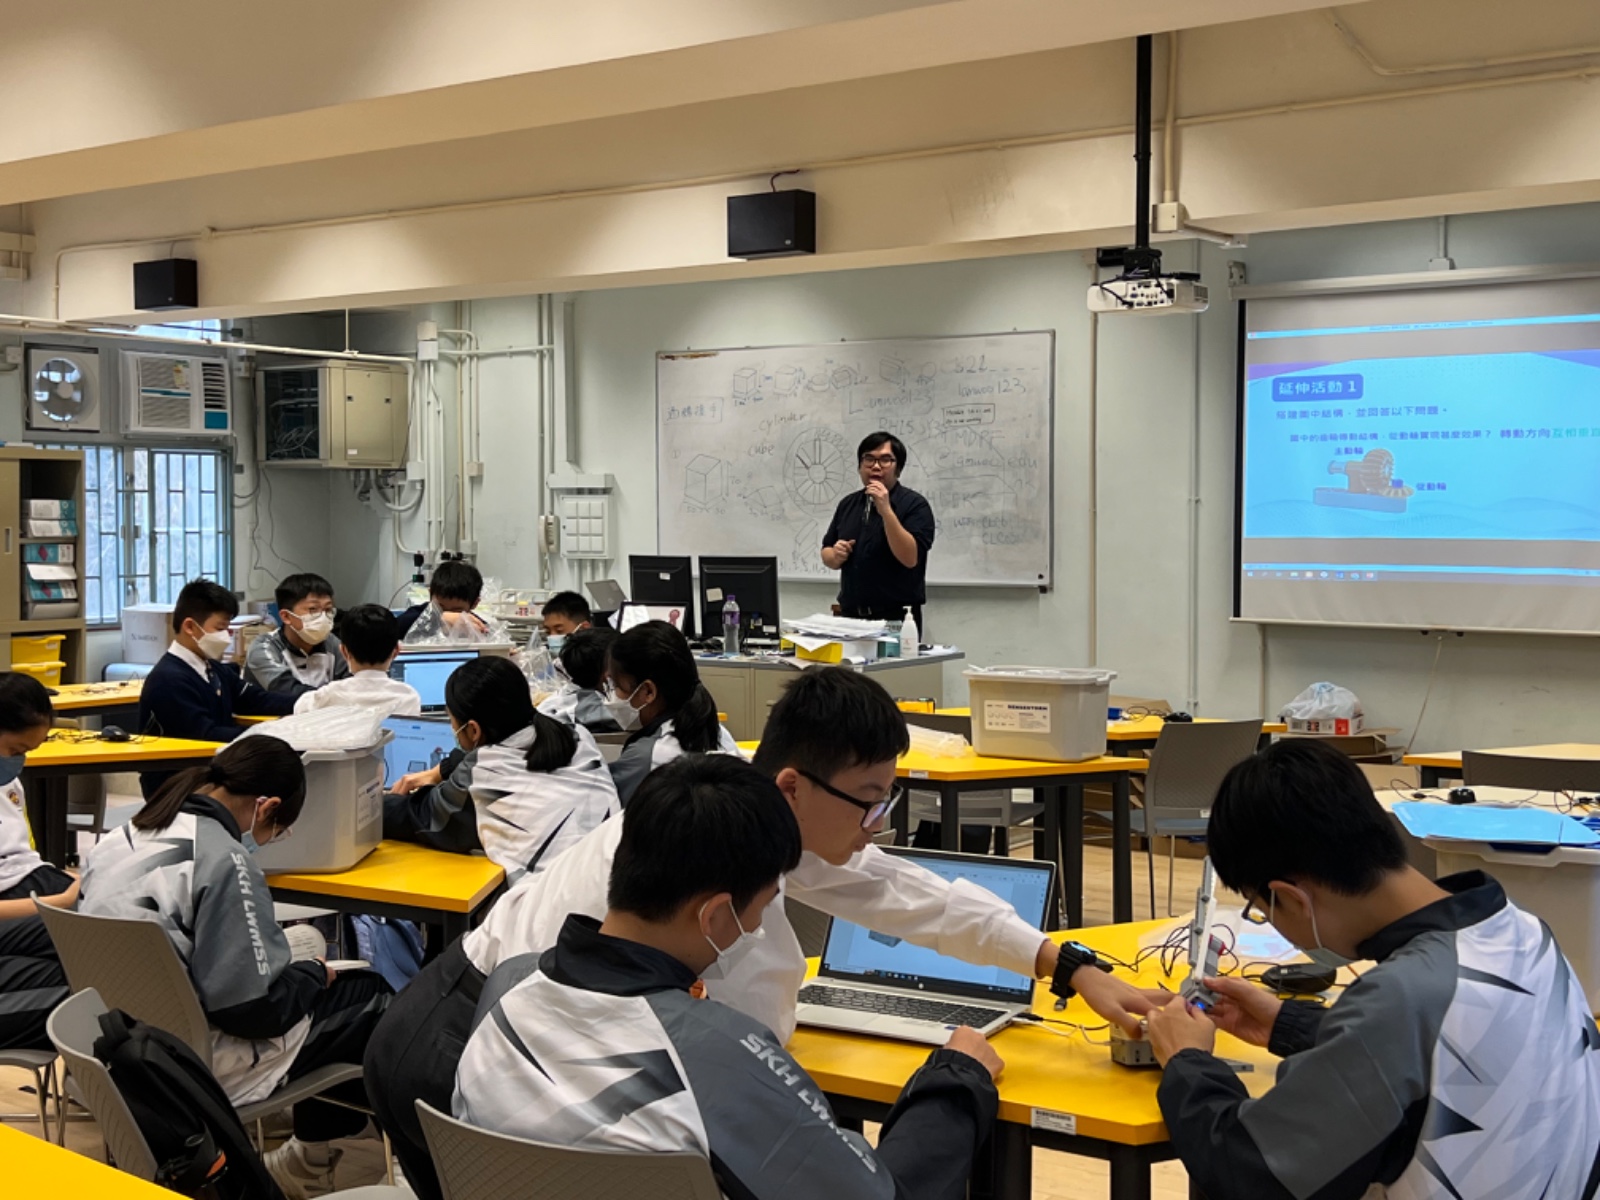 AI Maker Student Training Course - SKH Lam Woo Memorial Secondary School